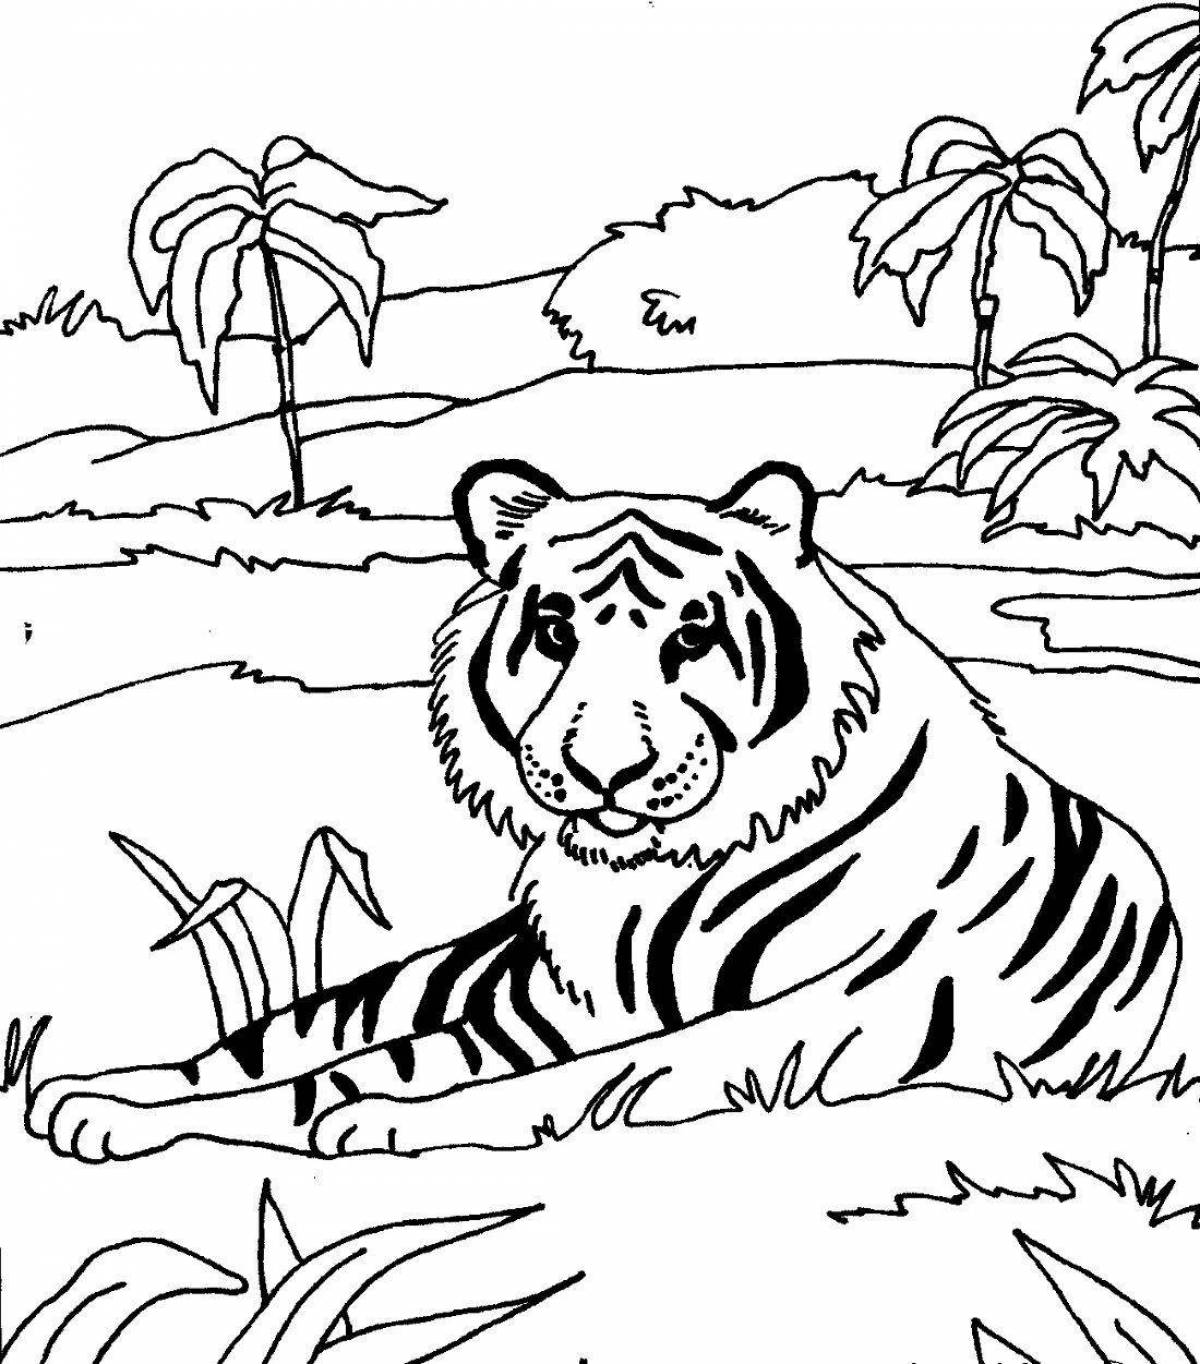 Уссурийский тигр #7